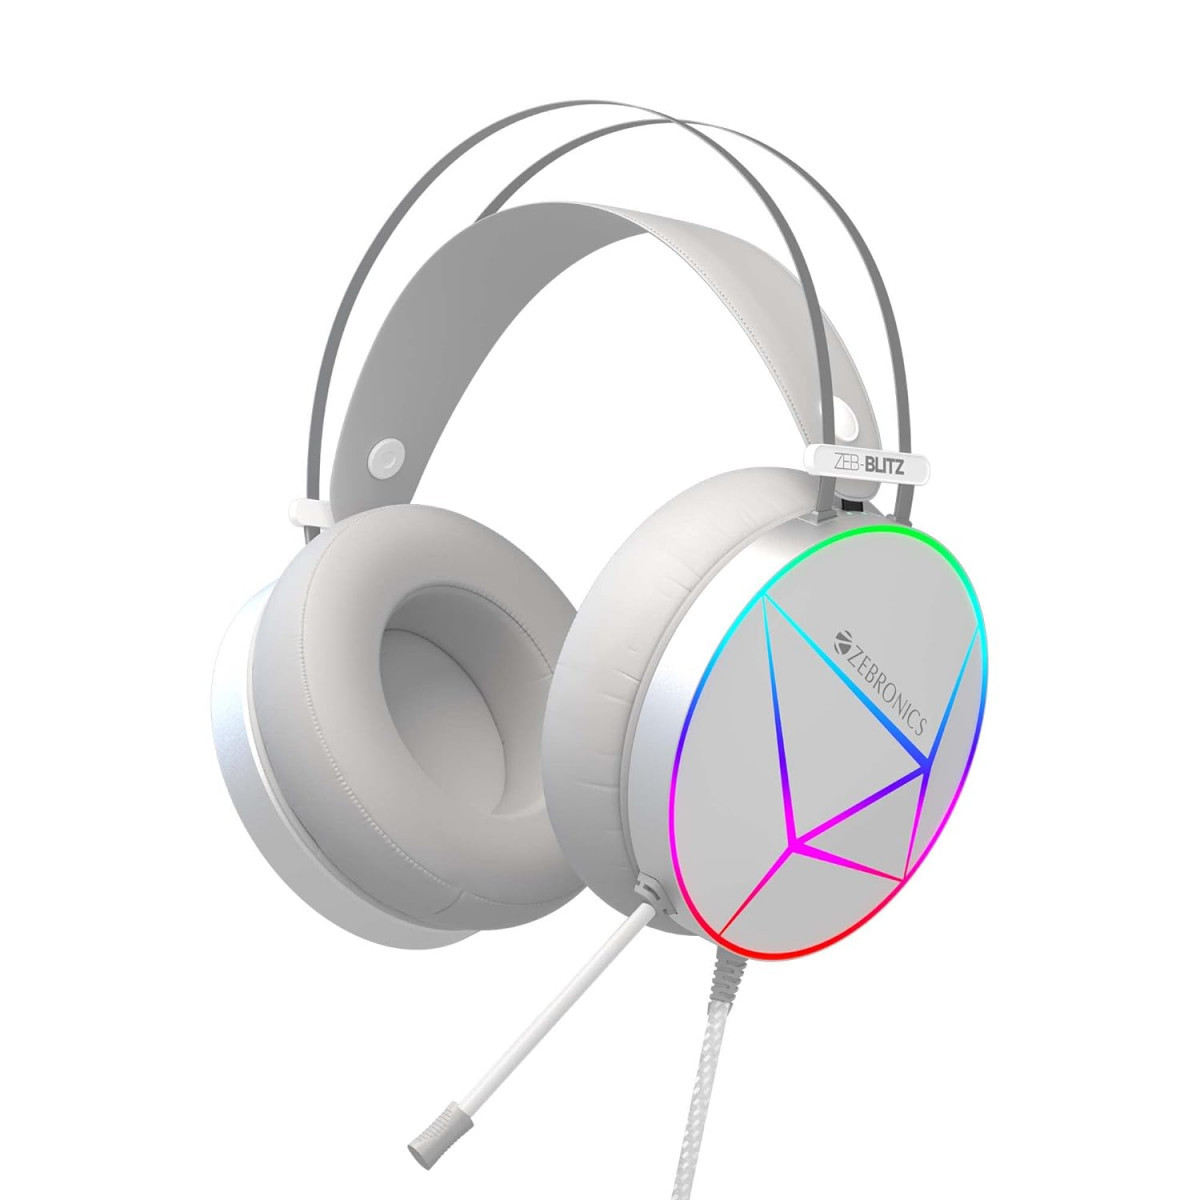 Zebronics Zeb-Blitz USB Gaming Wired Over Ear Headphones White